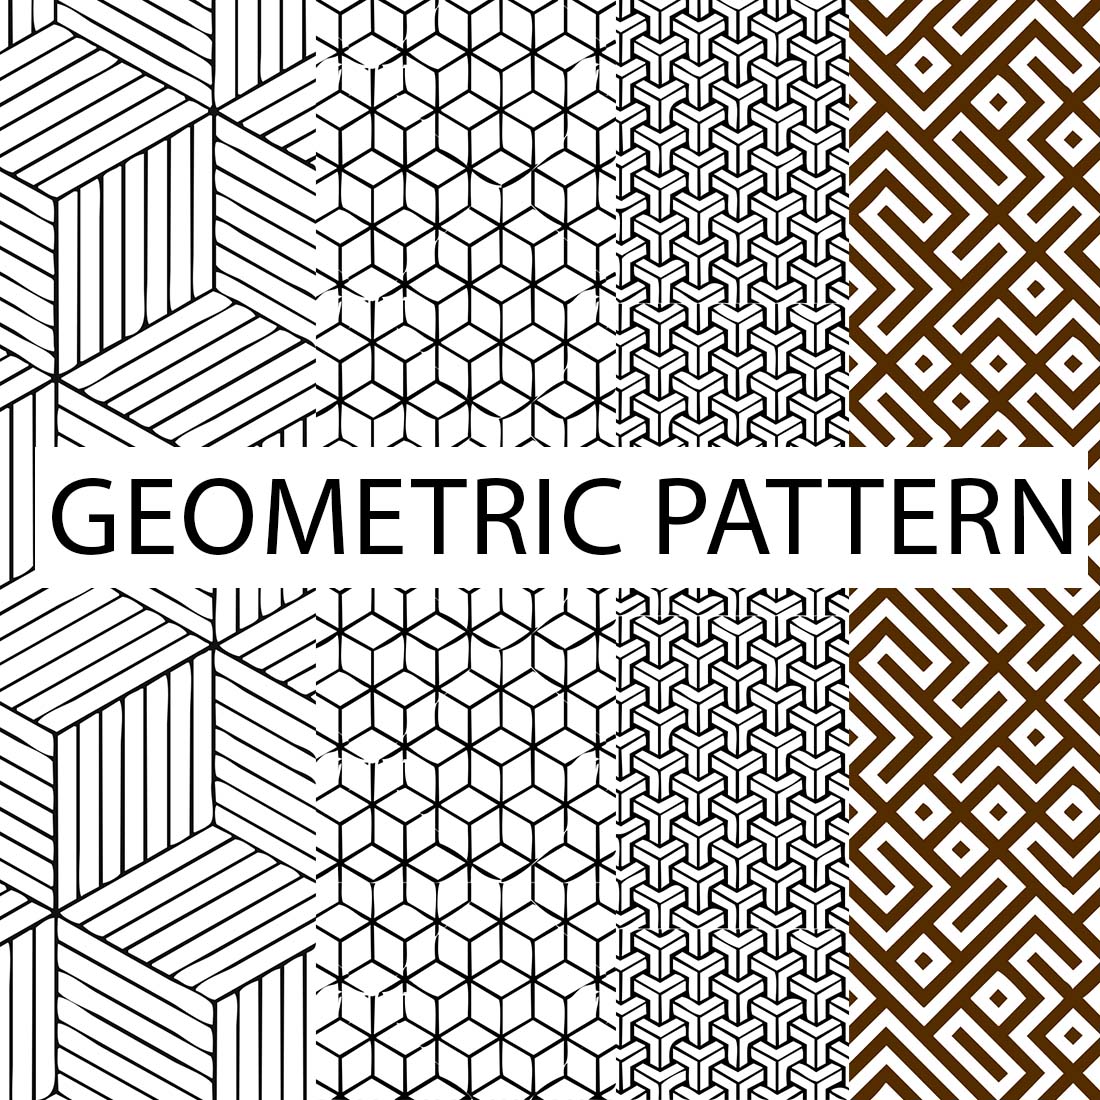 geometric pattern preview image.